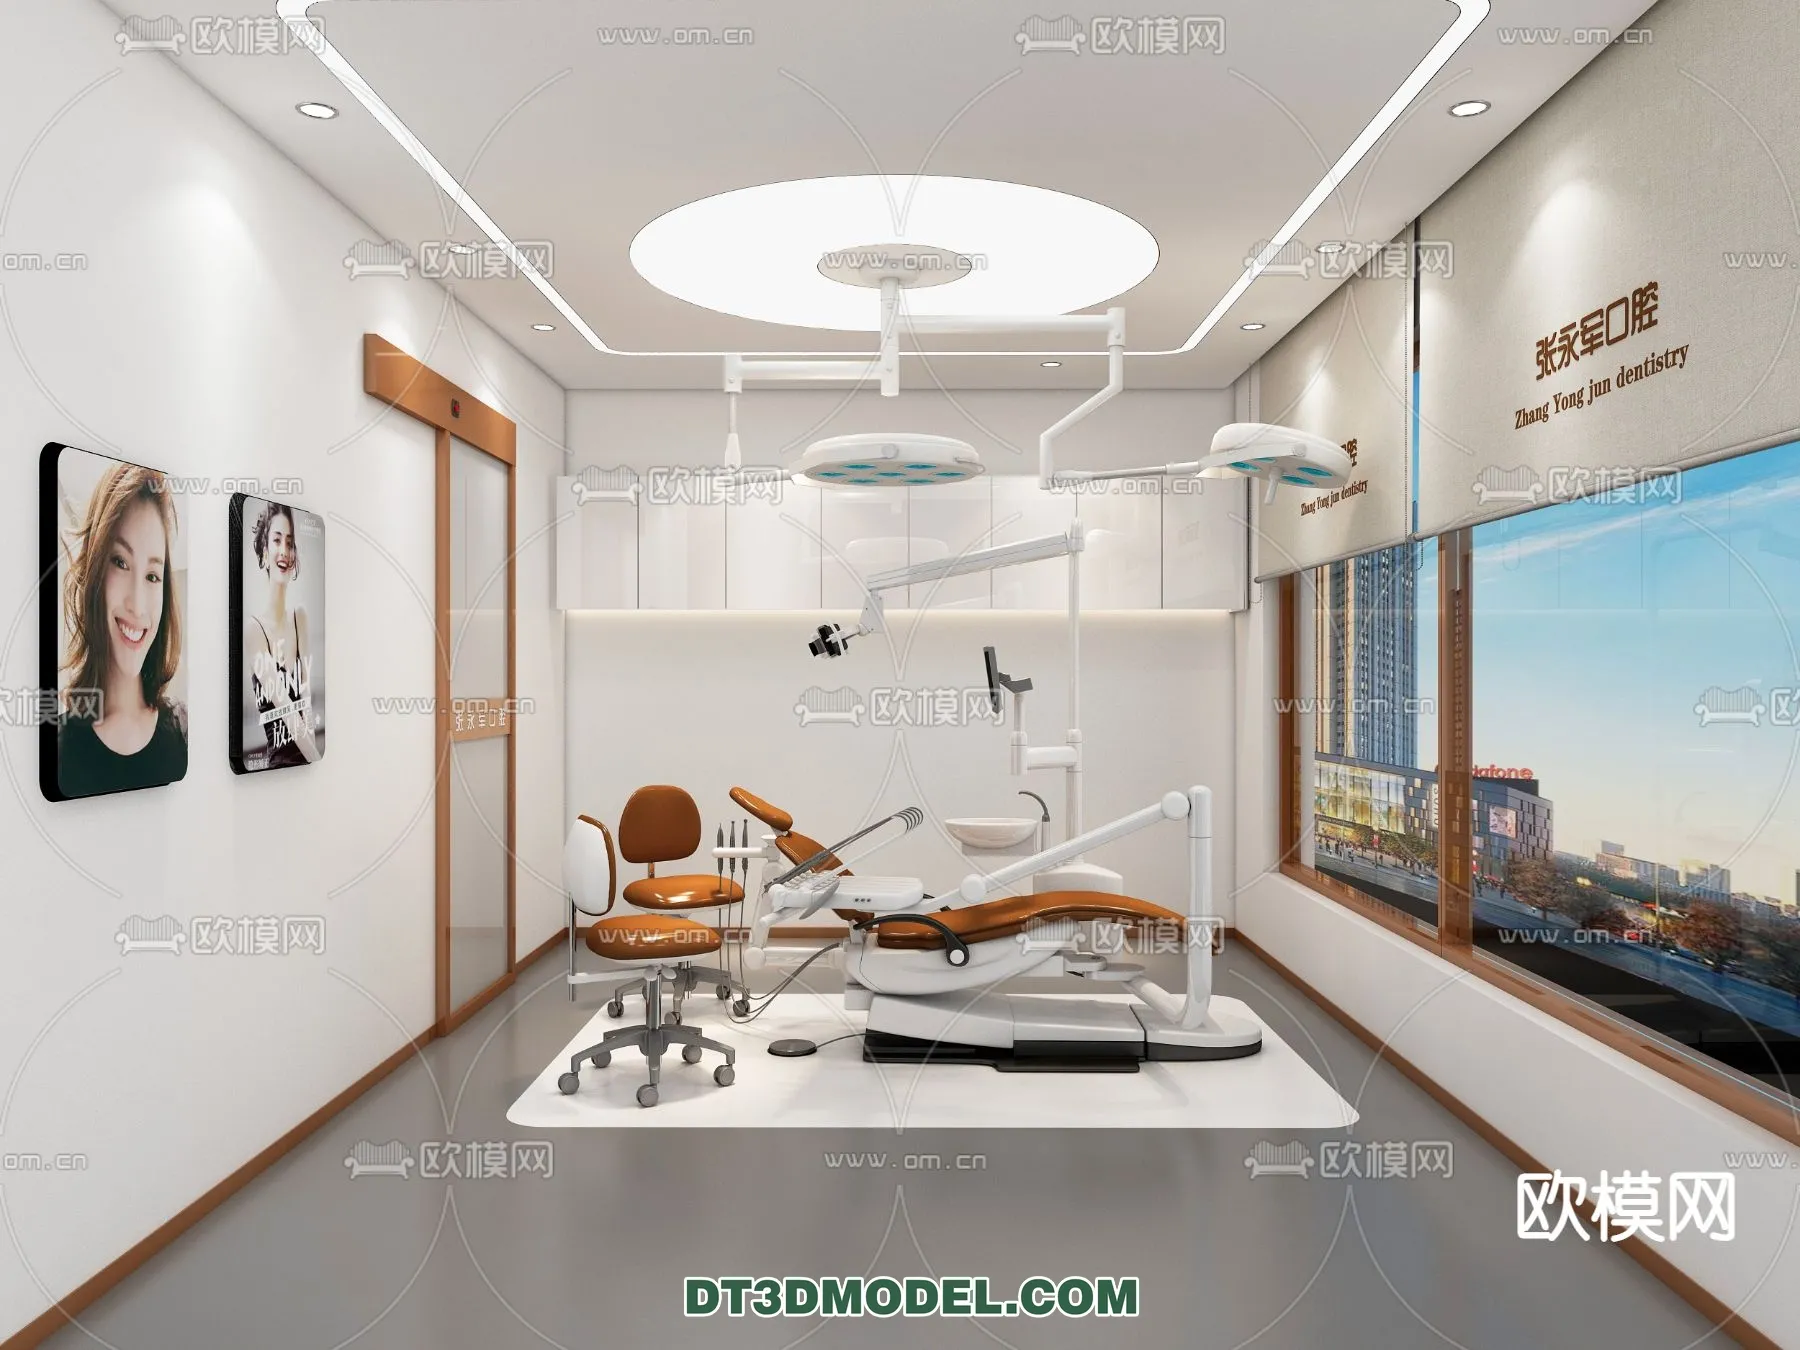 HOSPITAL 3D SCENES – MODERN – 0014